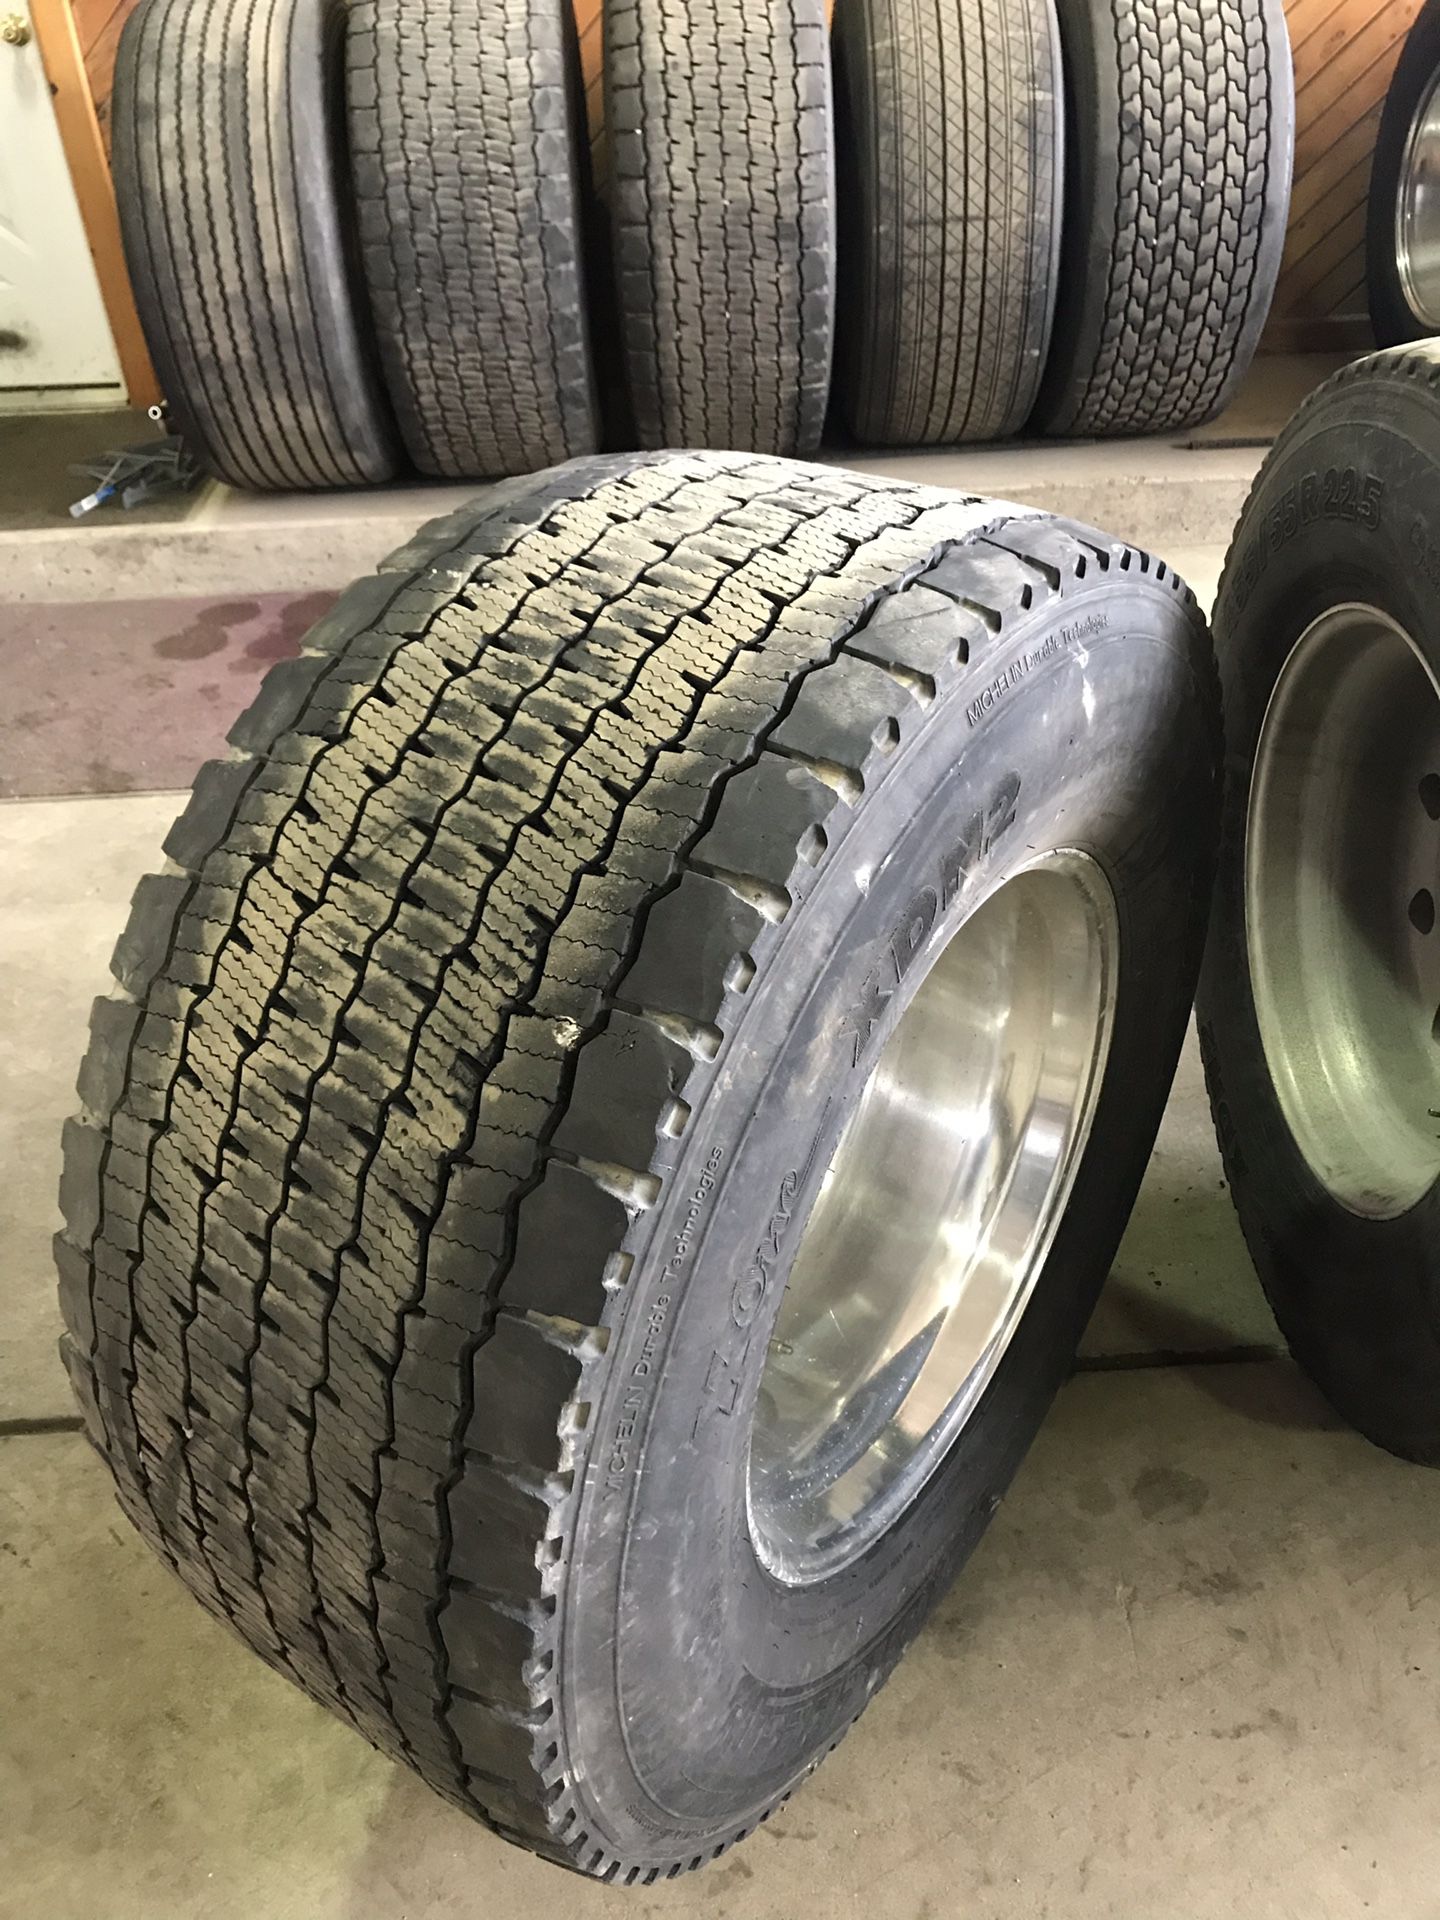 445/50 R22.5 Super single used & new tires, rims